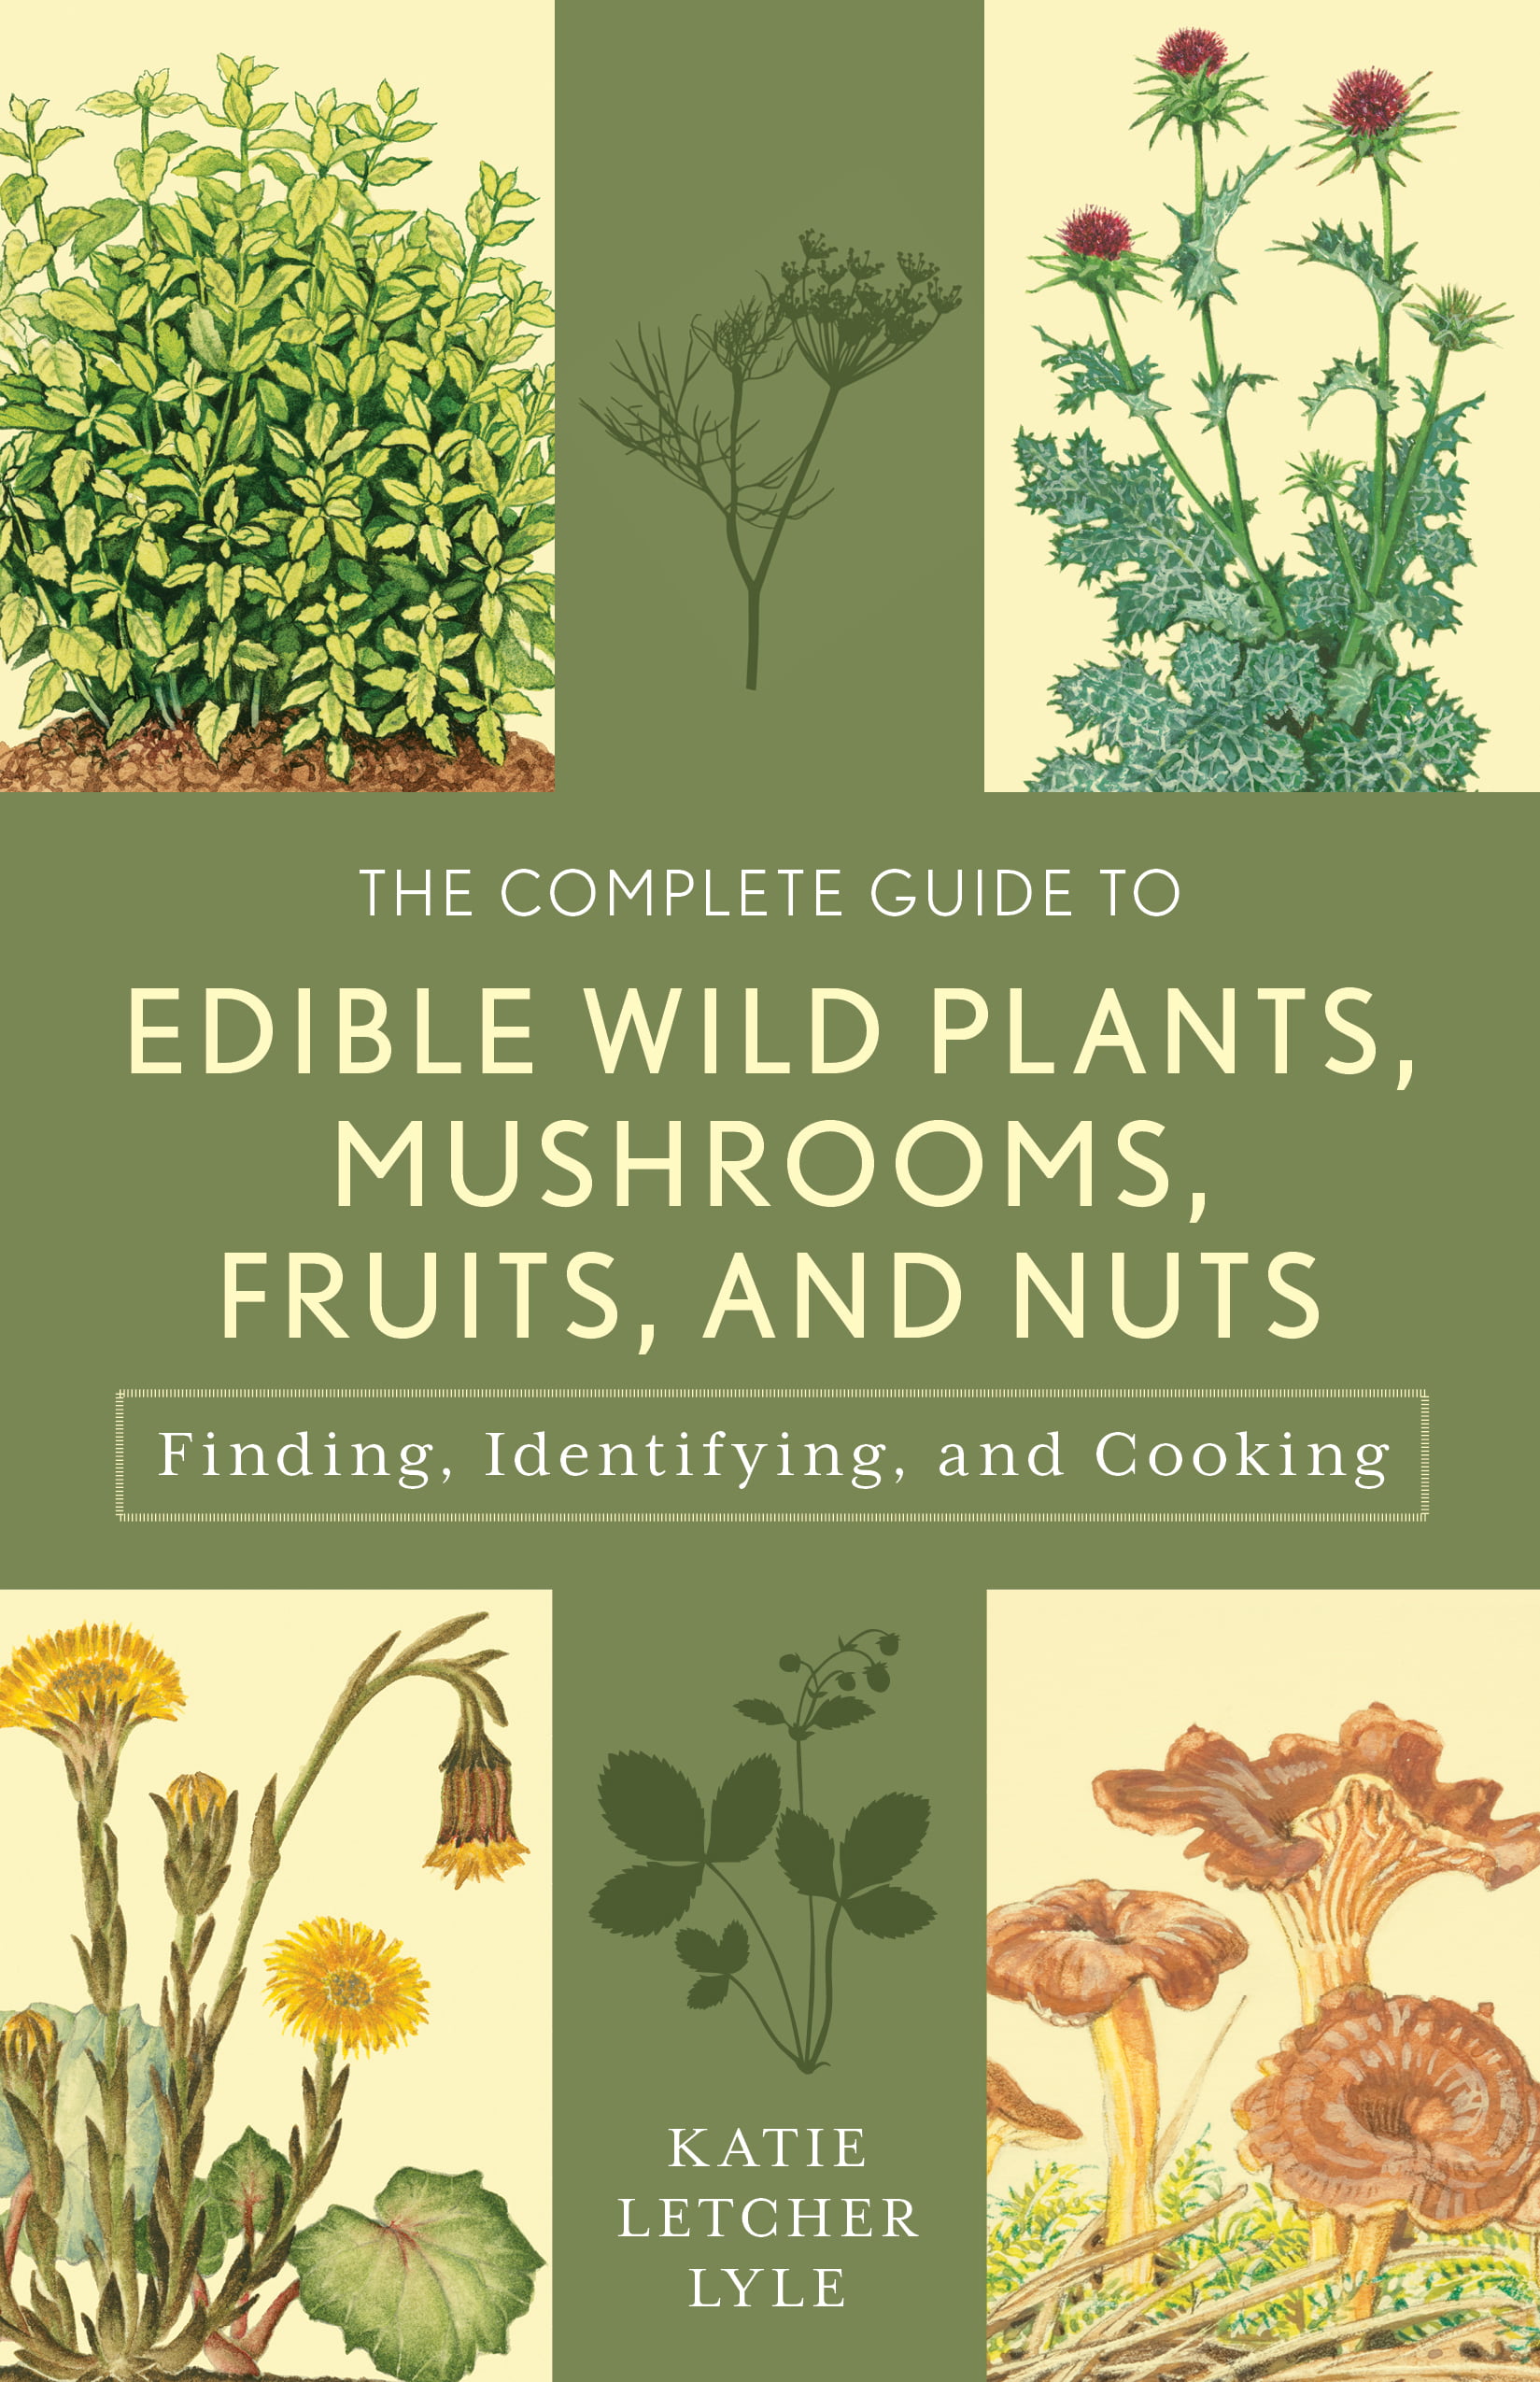 Identifying Wild Edible Plants